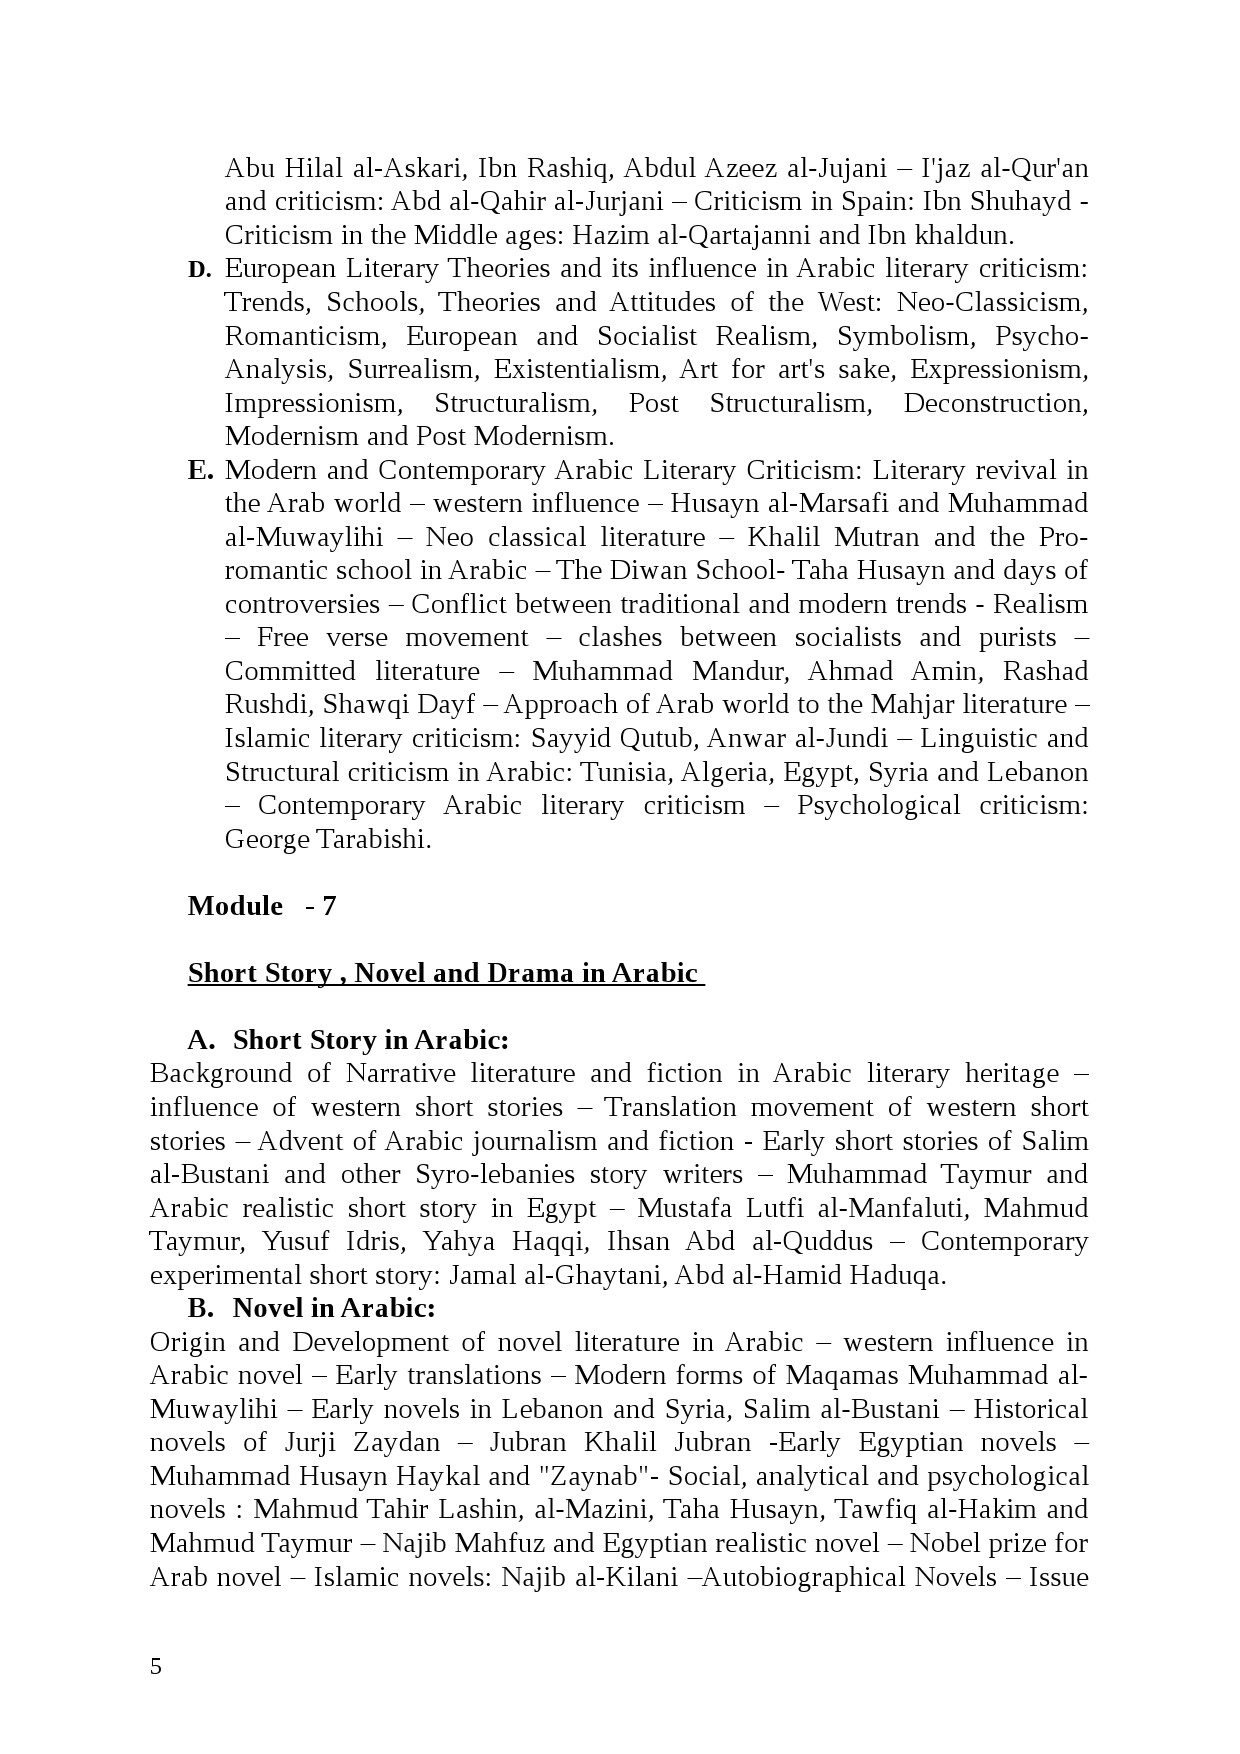 Kerala PSC Assistant Professor Arabic Exam Revised Syllabus - Notification Image 5